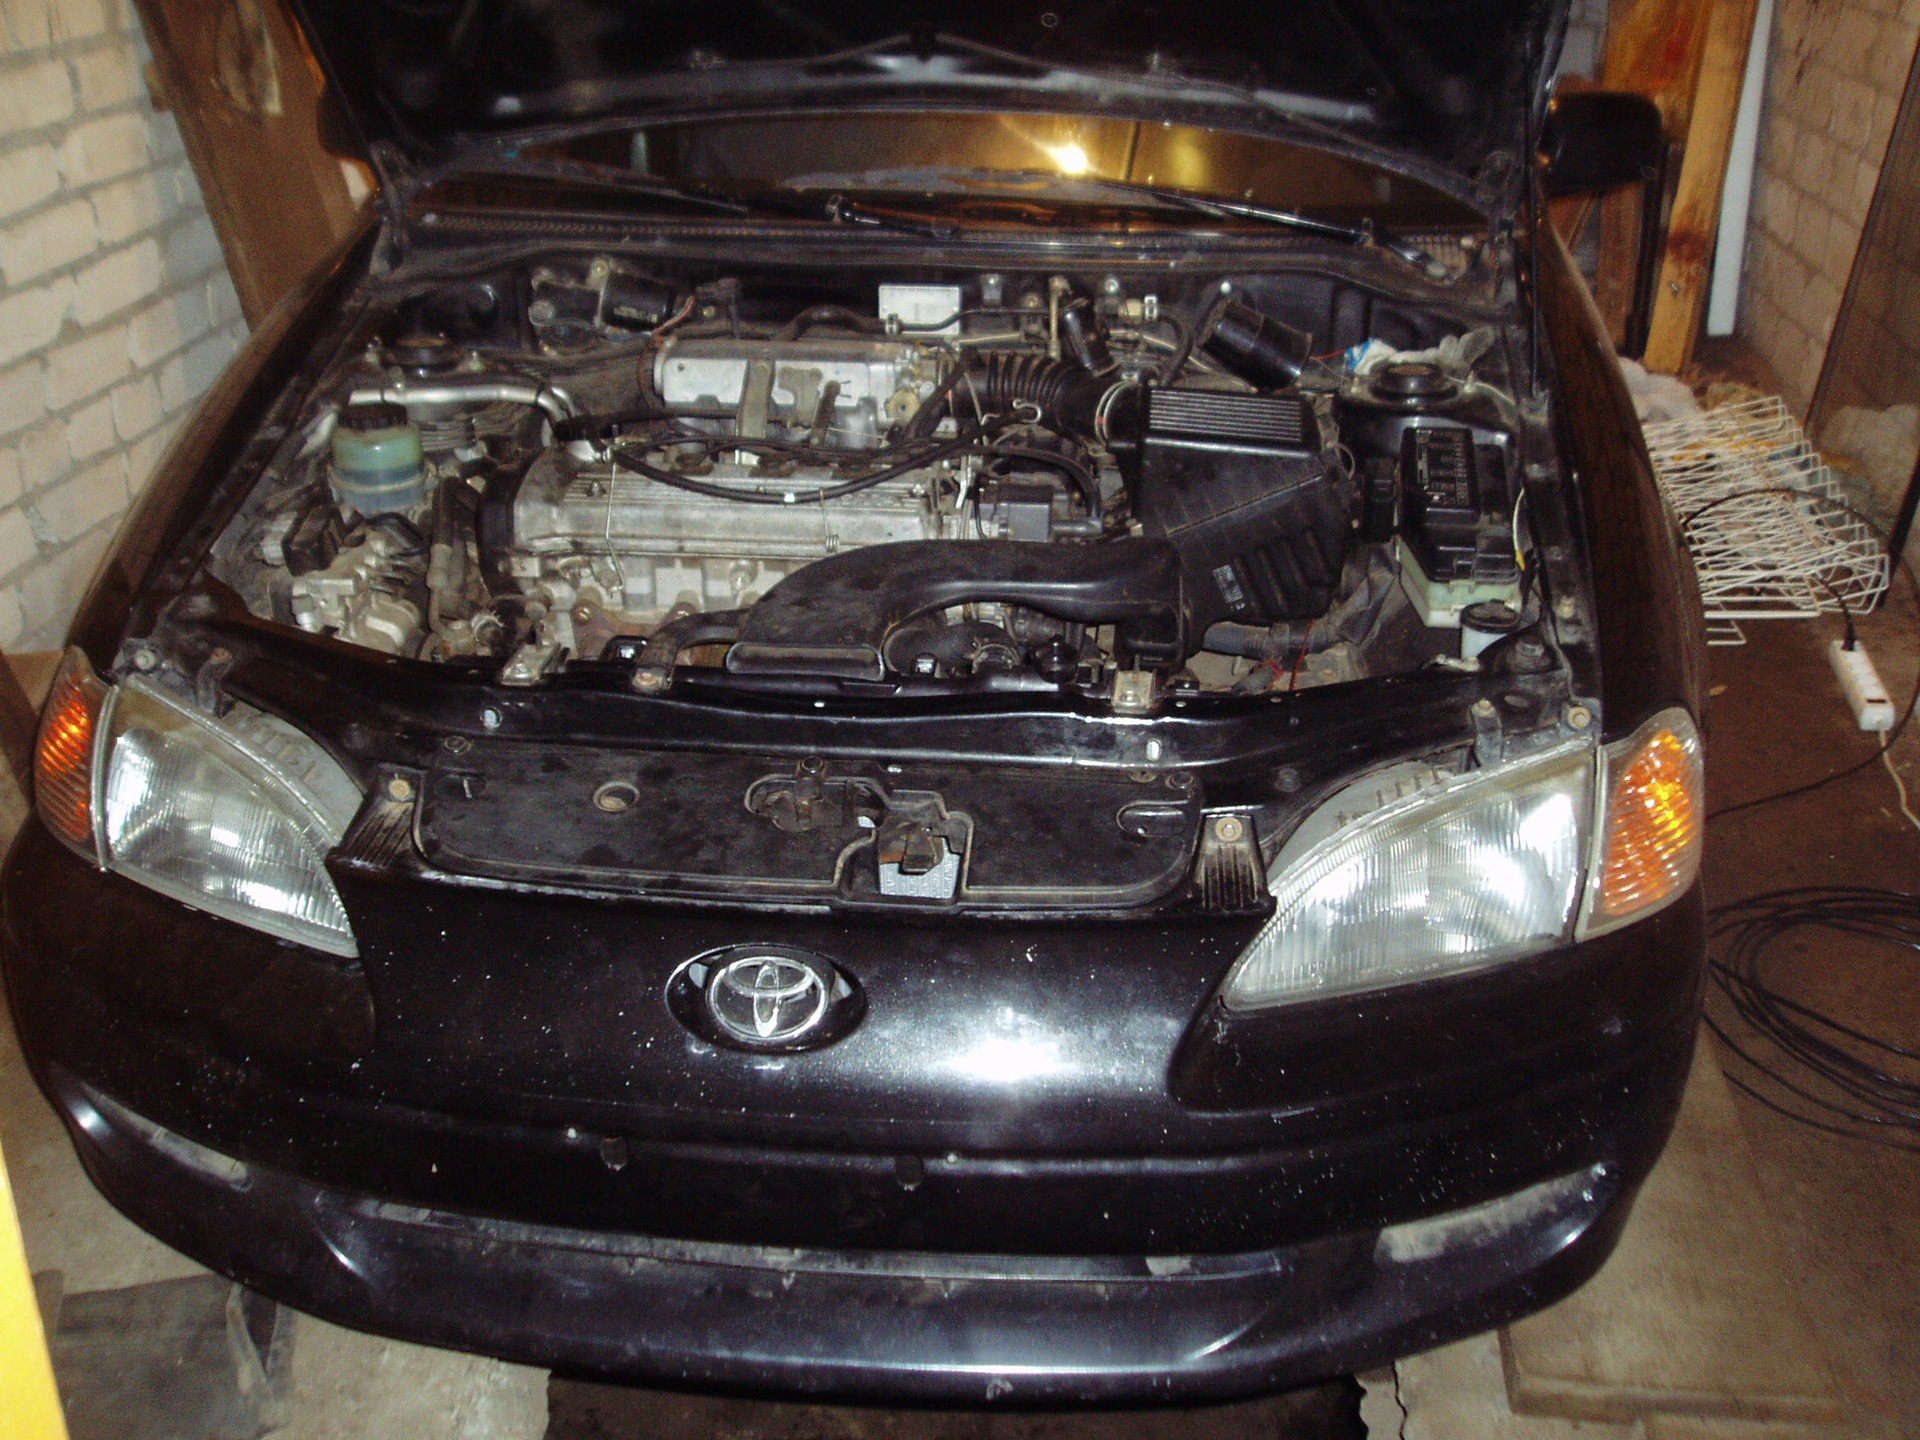         Toyota Paseo 15 1999